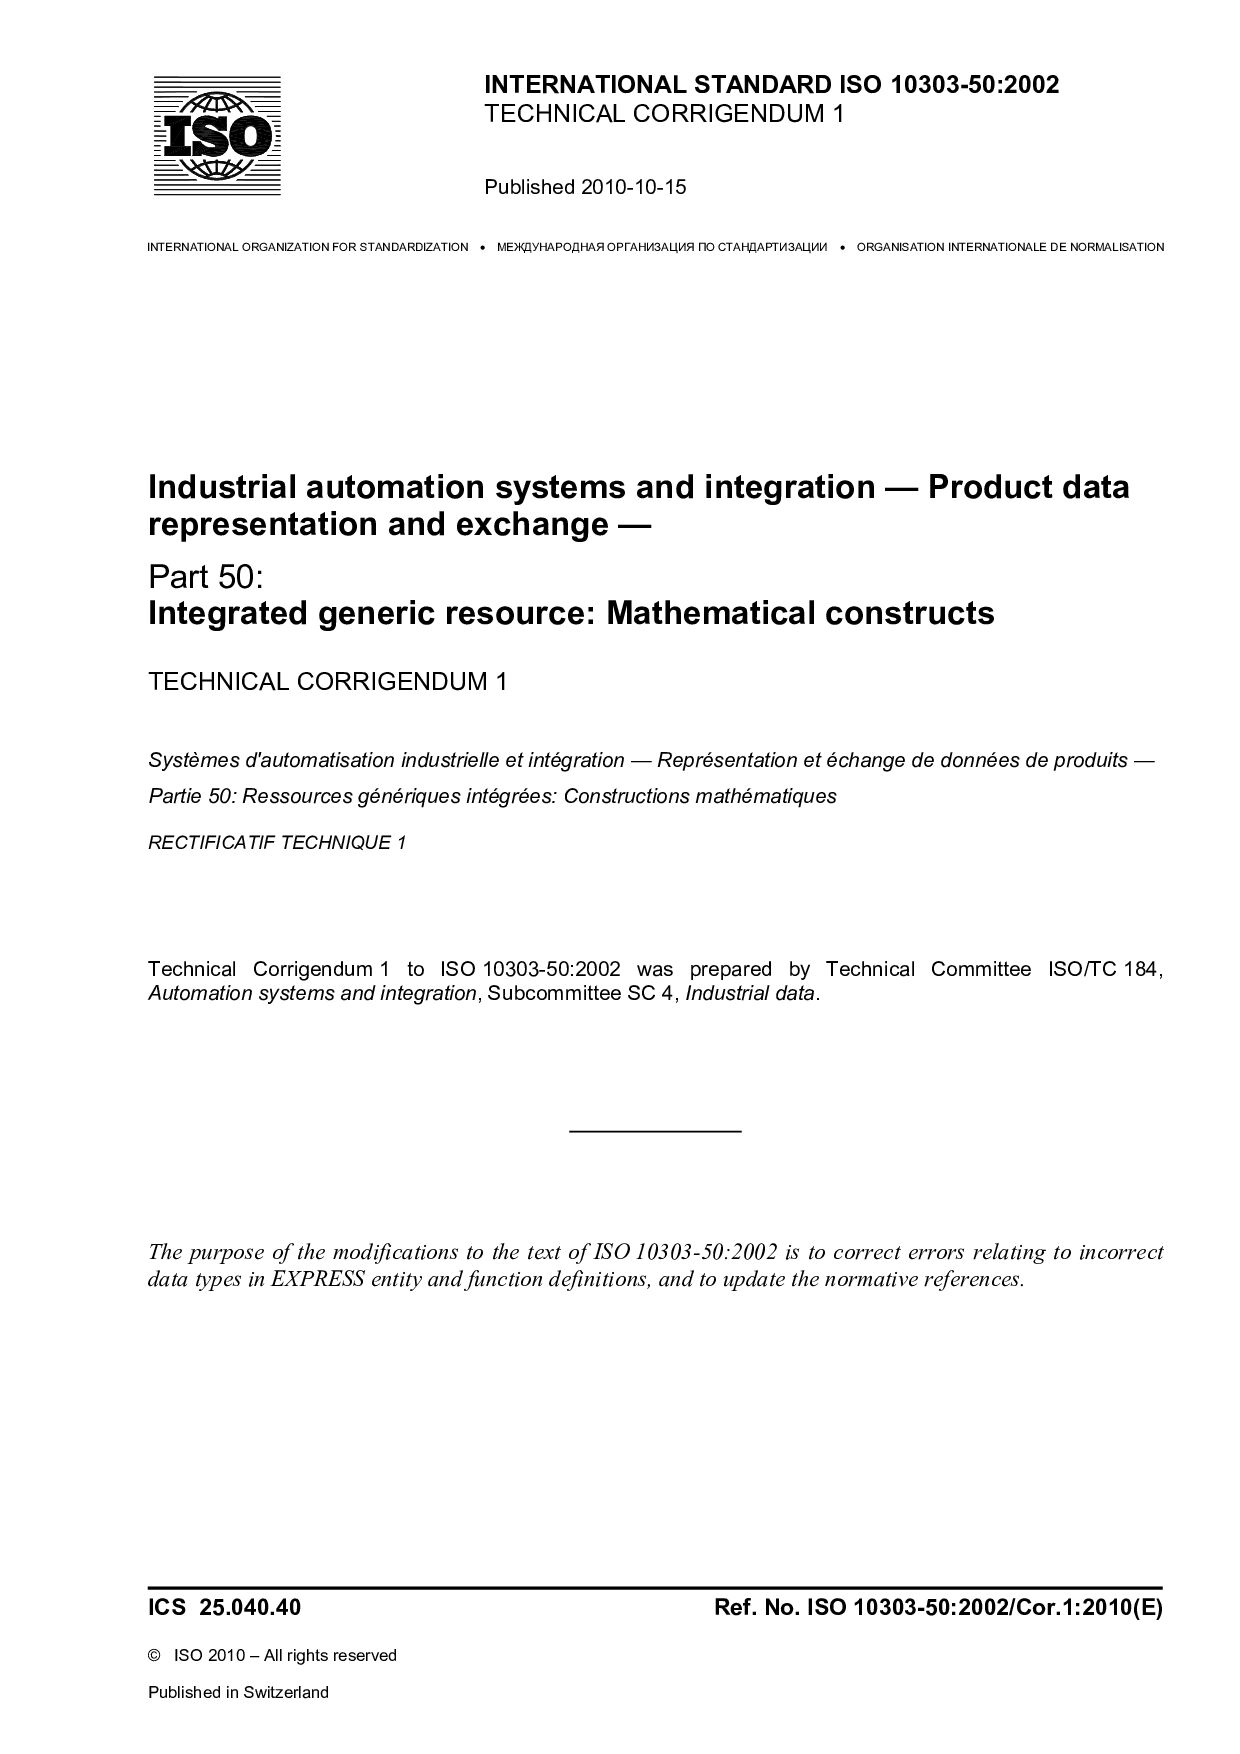 ISO 10303-50 Technical Corrigendum 1-2010